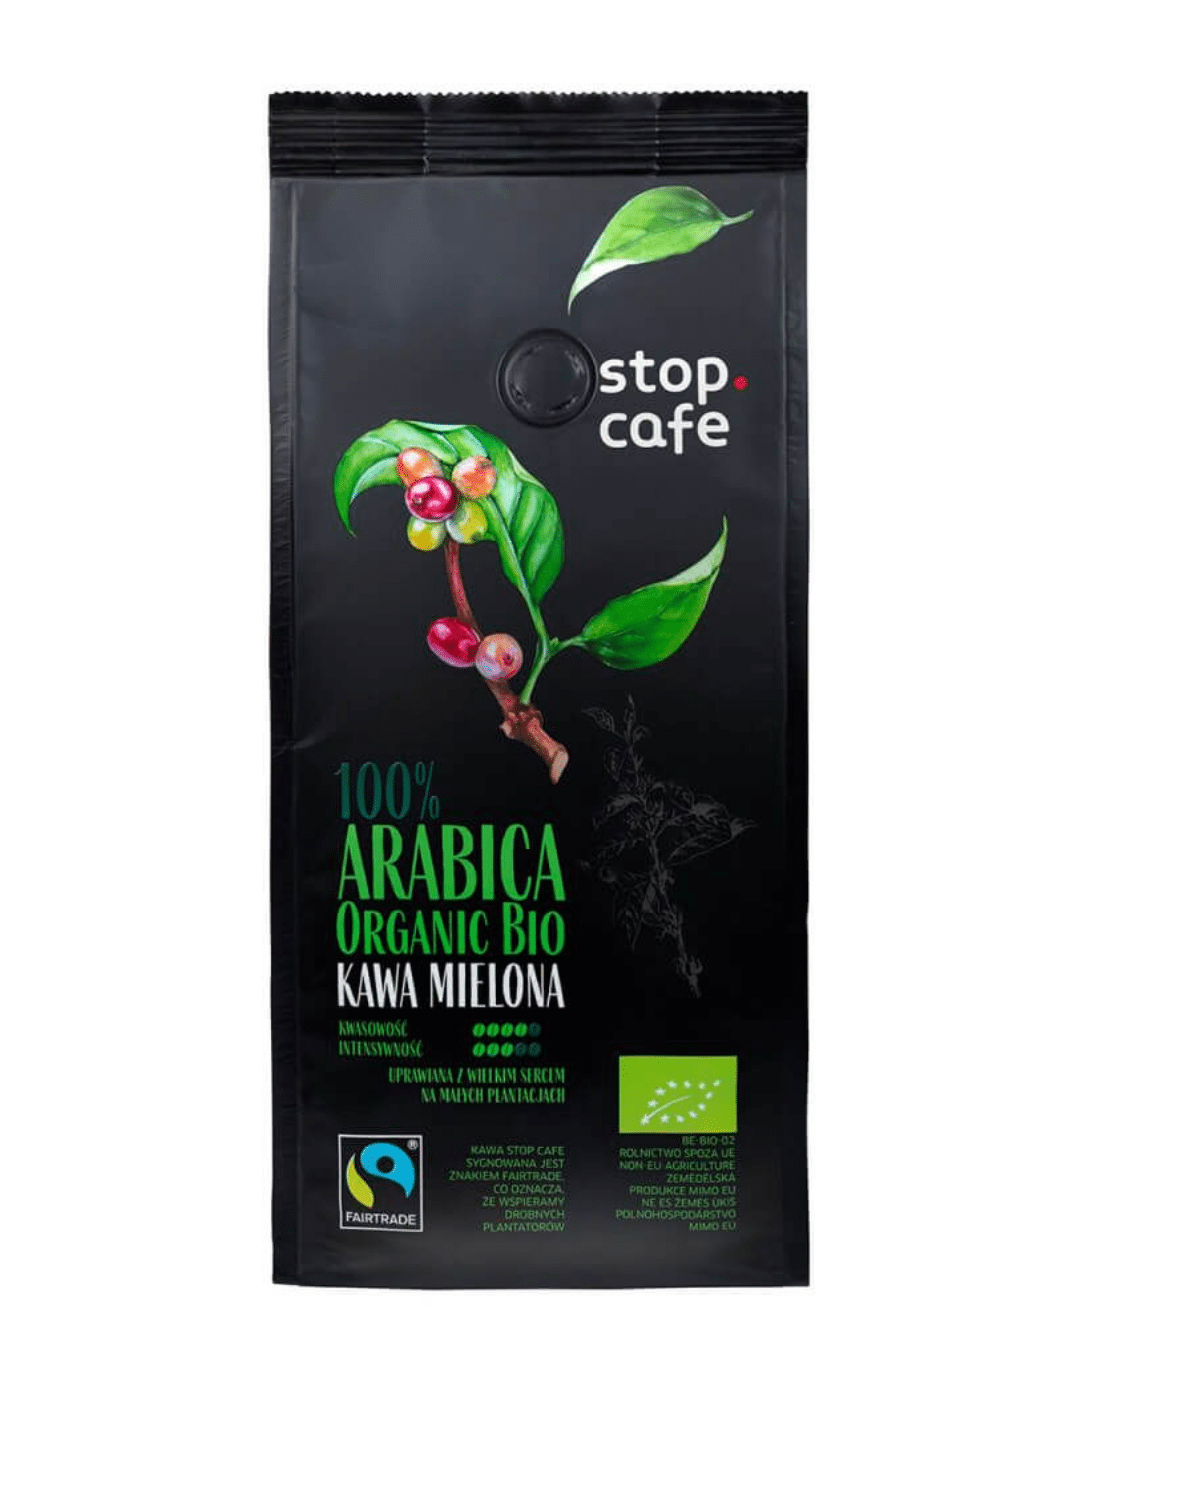 Kawa Mielona Arabica 100% Organic Bio